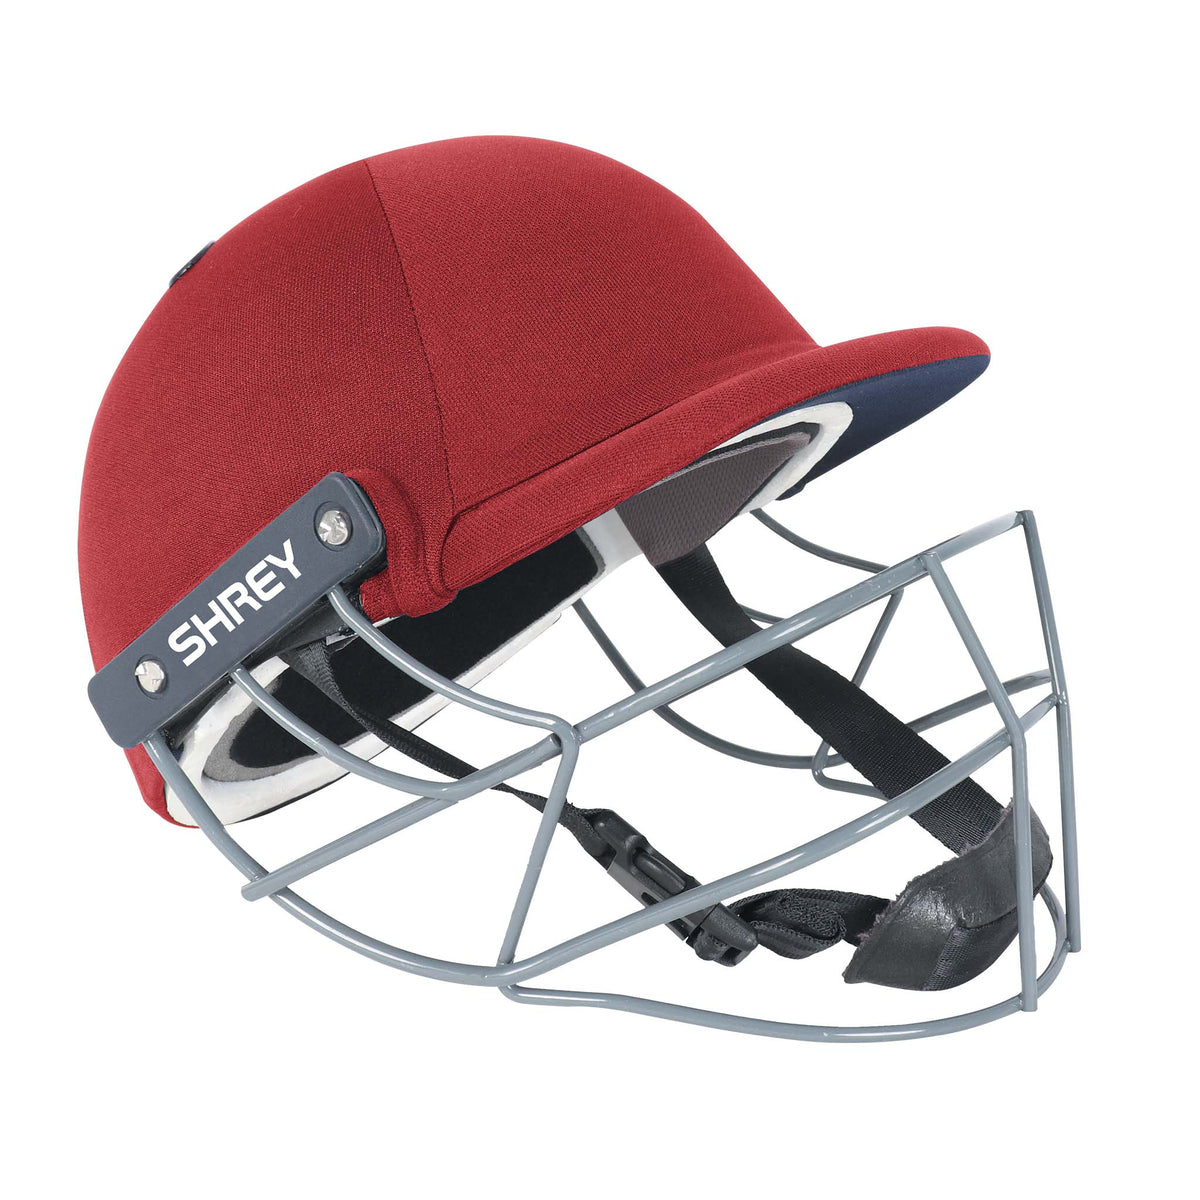 Shrey Performance 2.0 Steel Cricket Helmet: Maroon